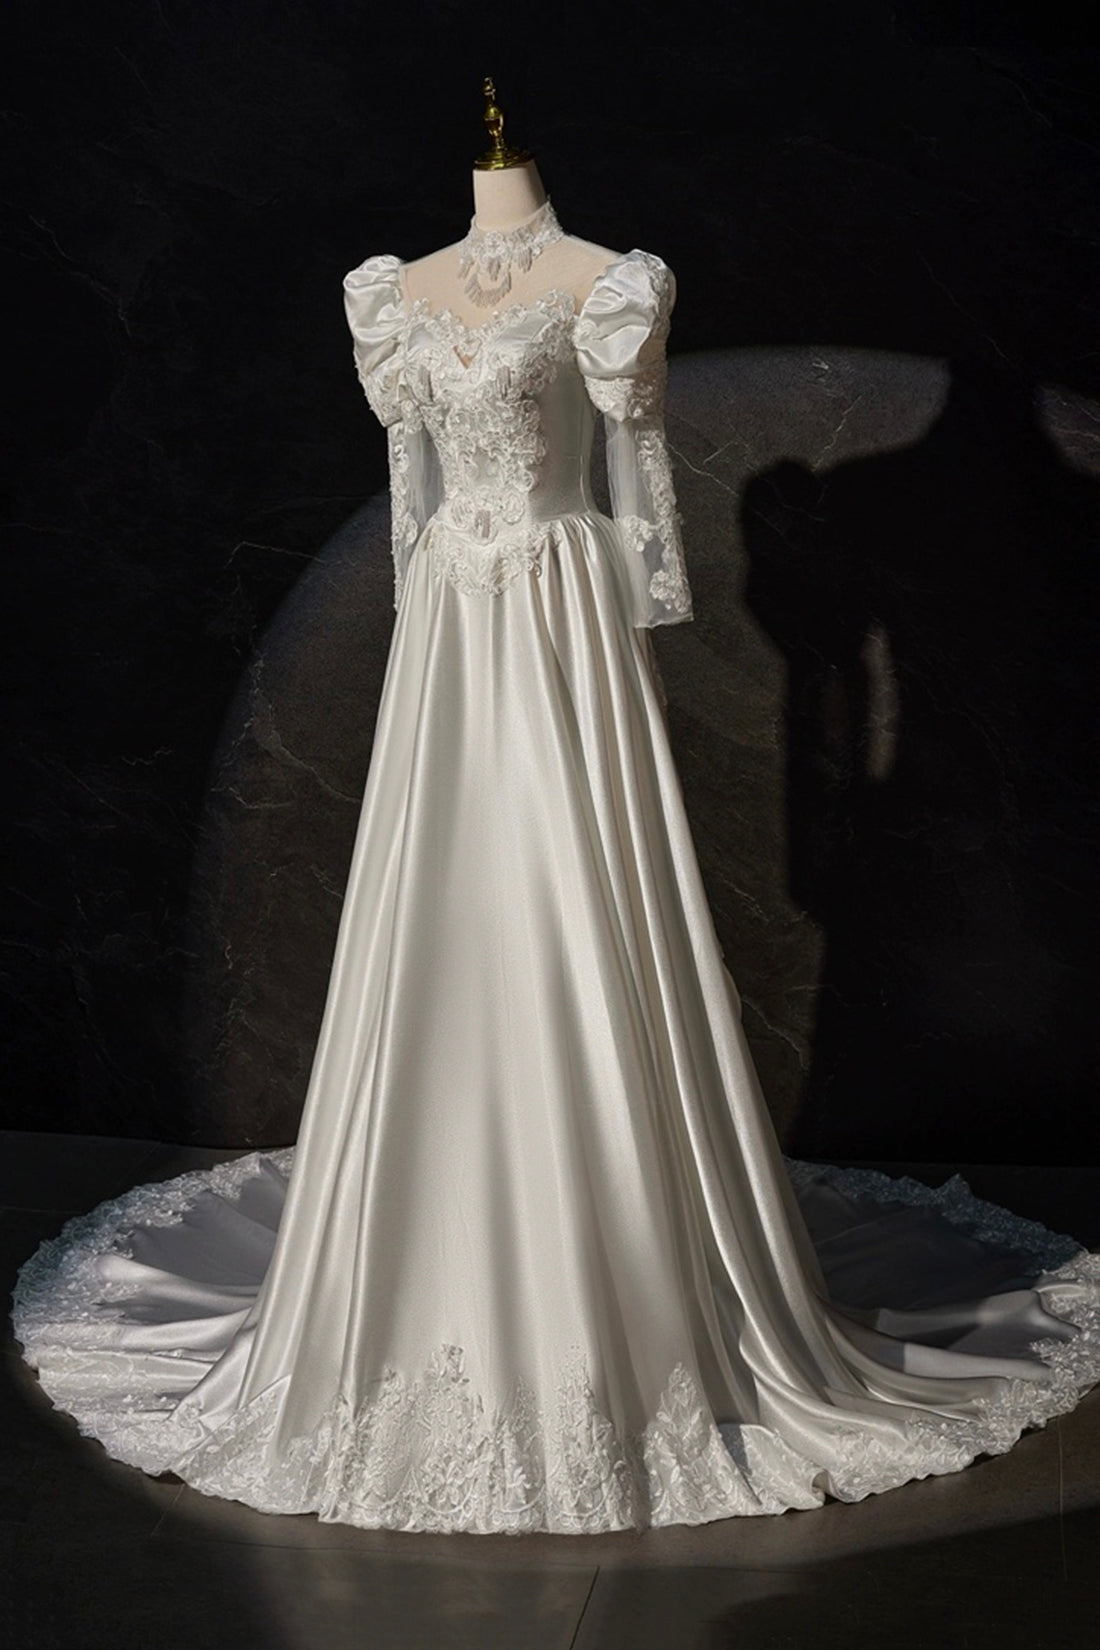 Minimalist elegant white satin ball gown wedding dress hanging sleeves or  short sleeves - various styles